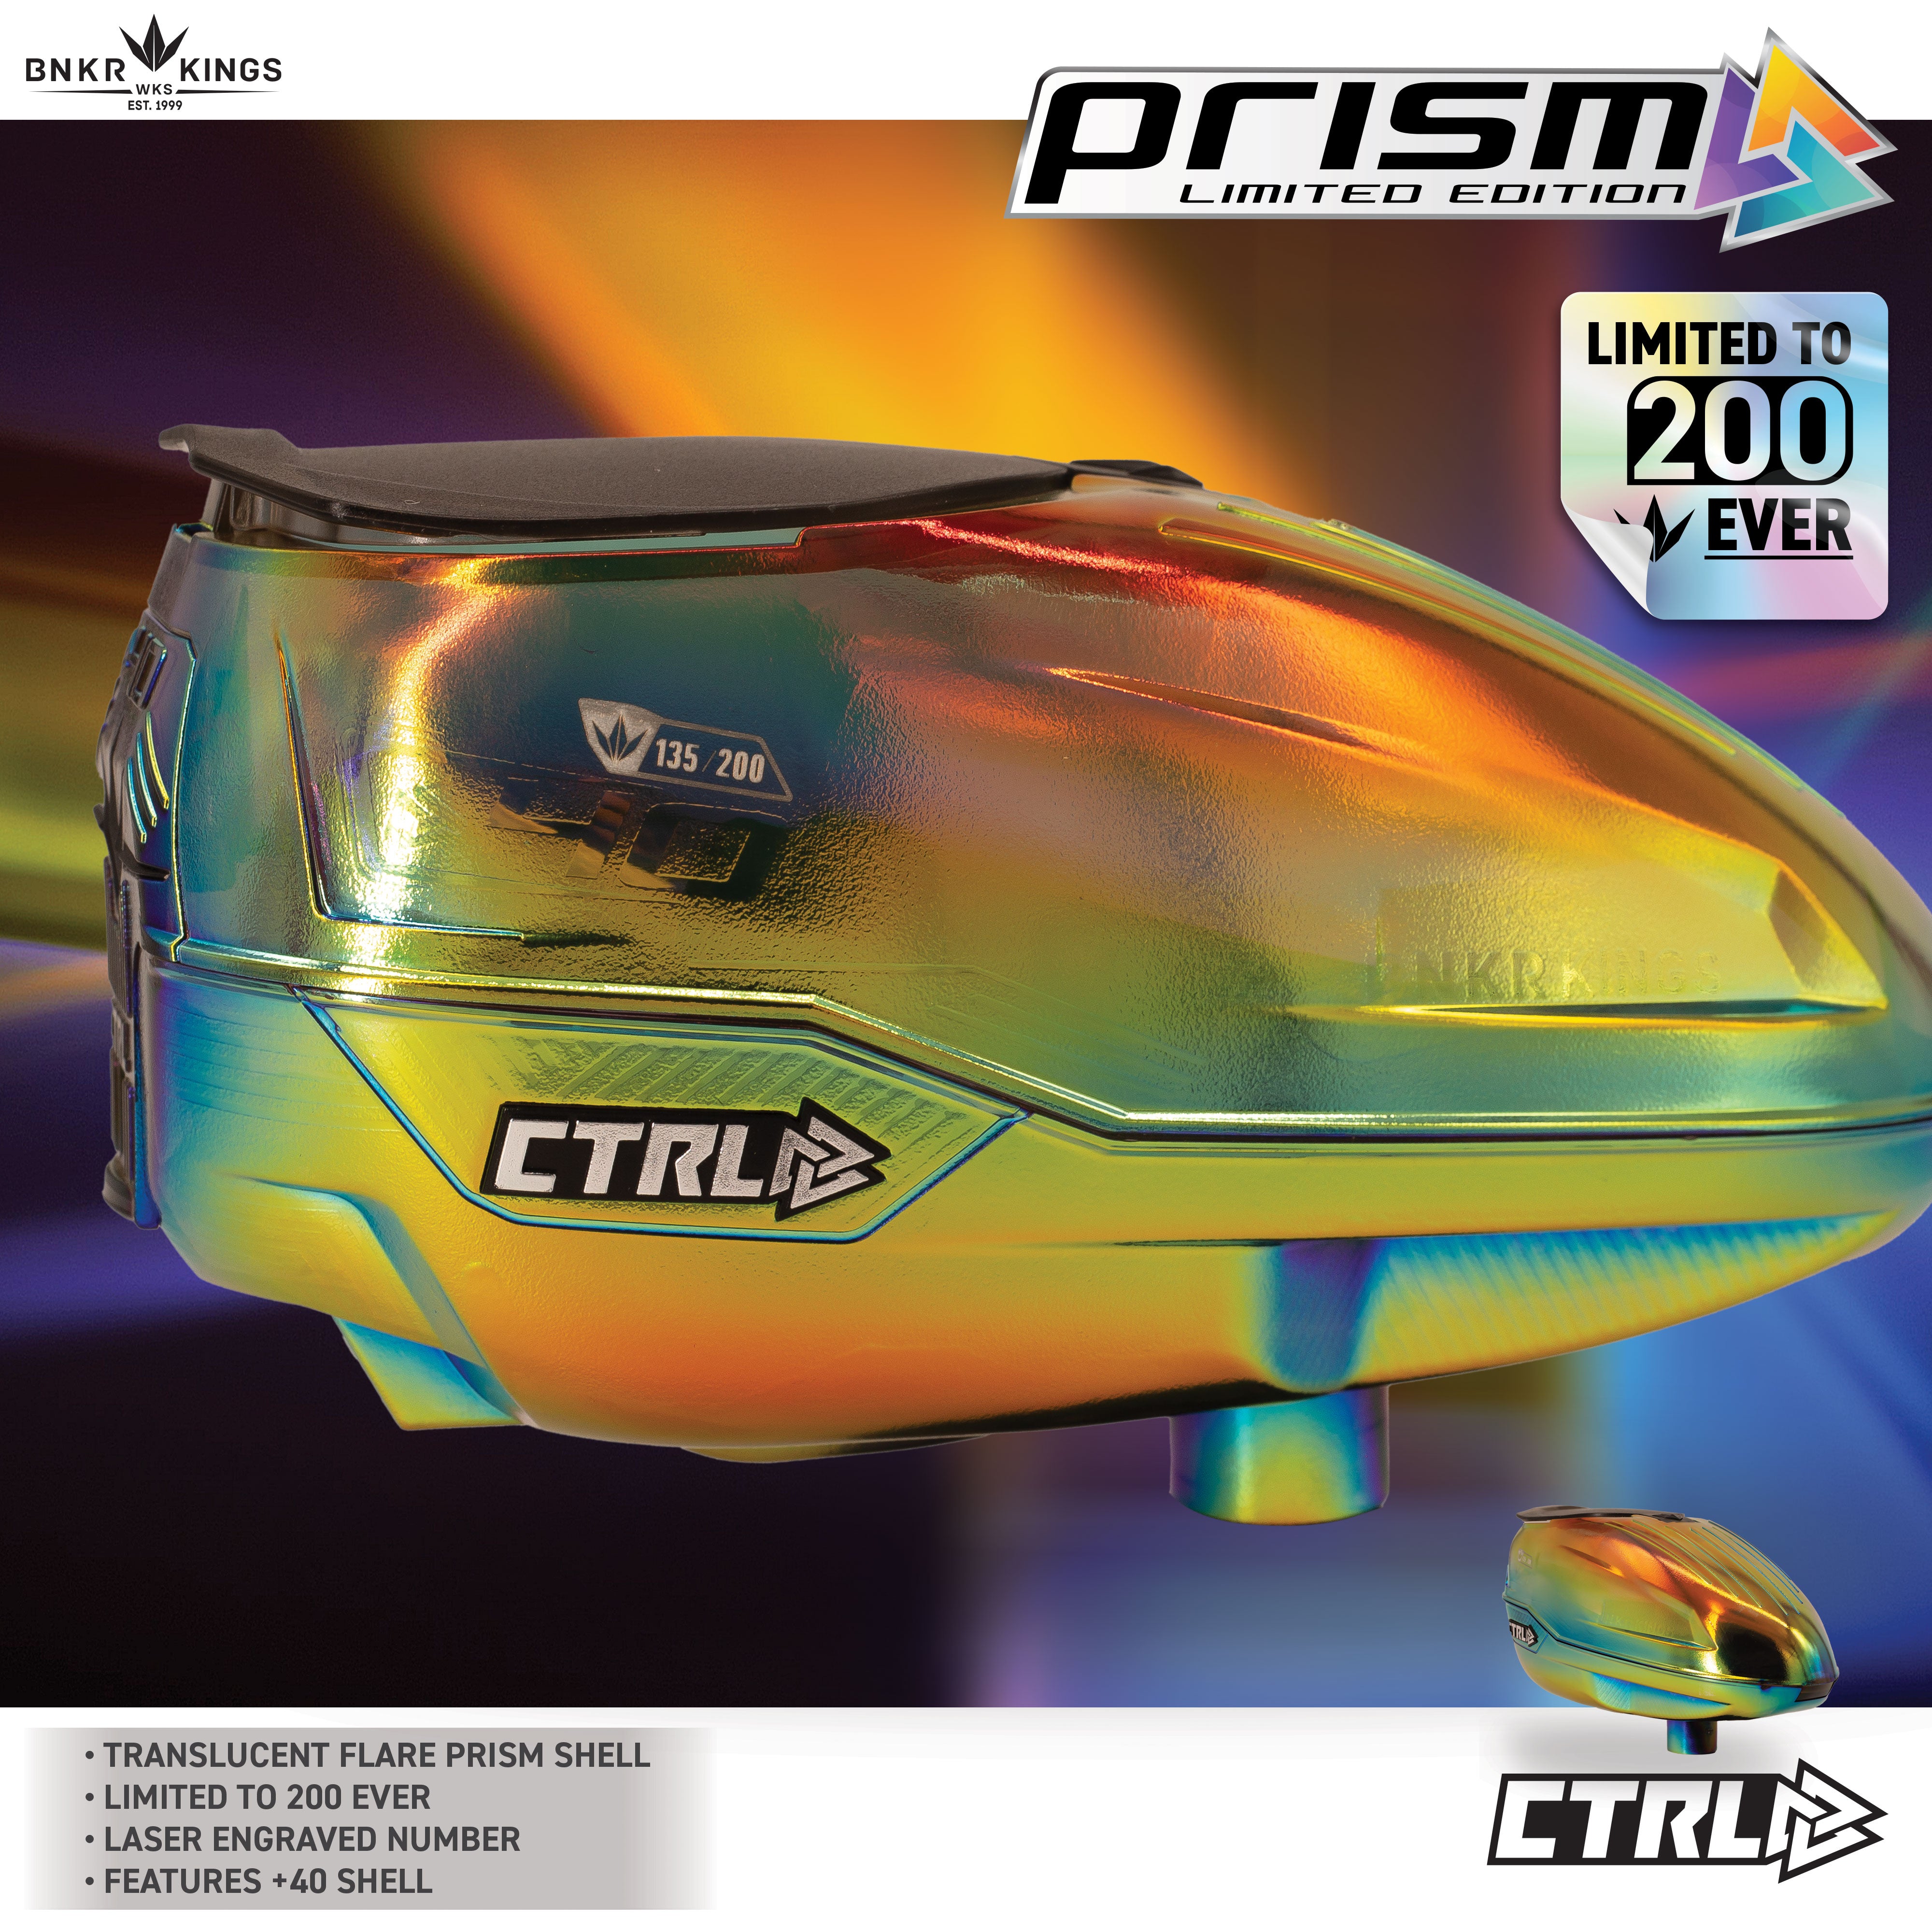 Bunkerkings PRISM CTRL Loader - Flare (Limited to 200)